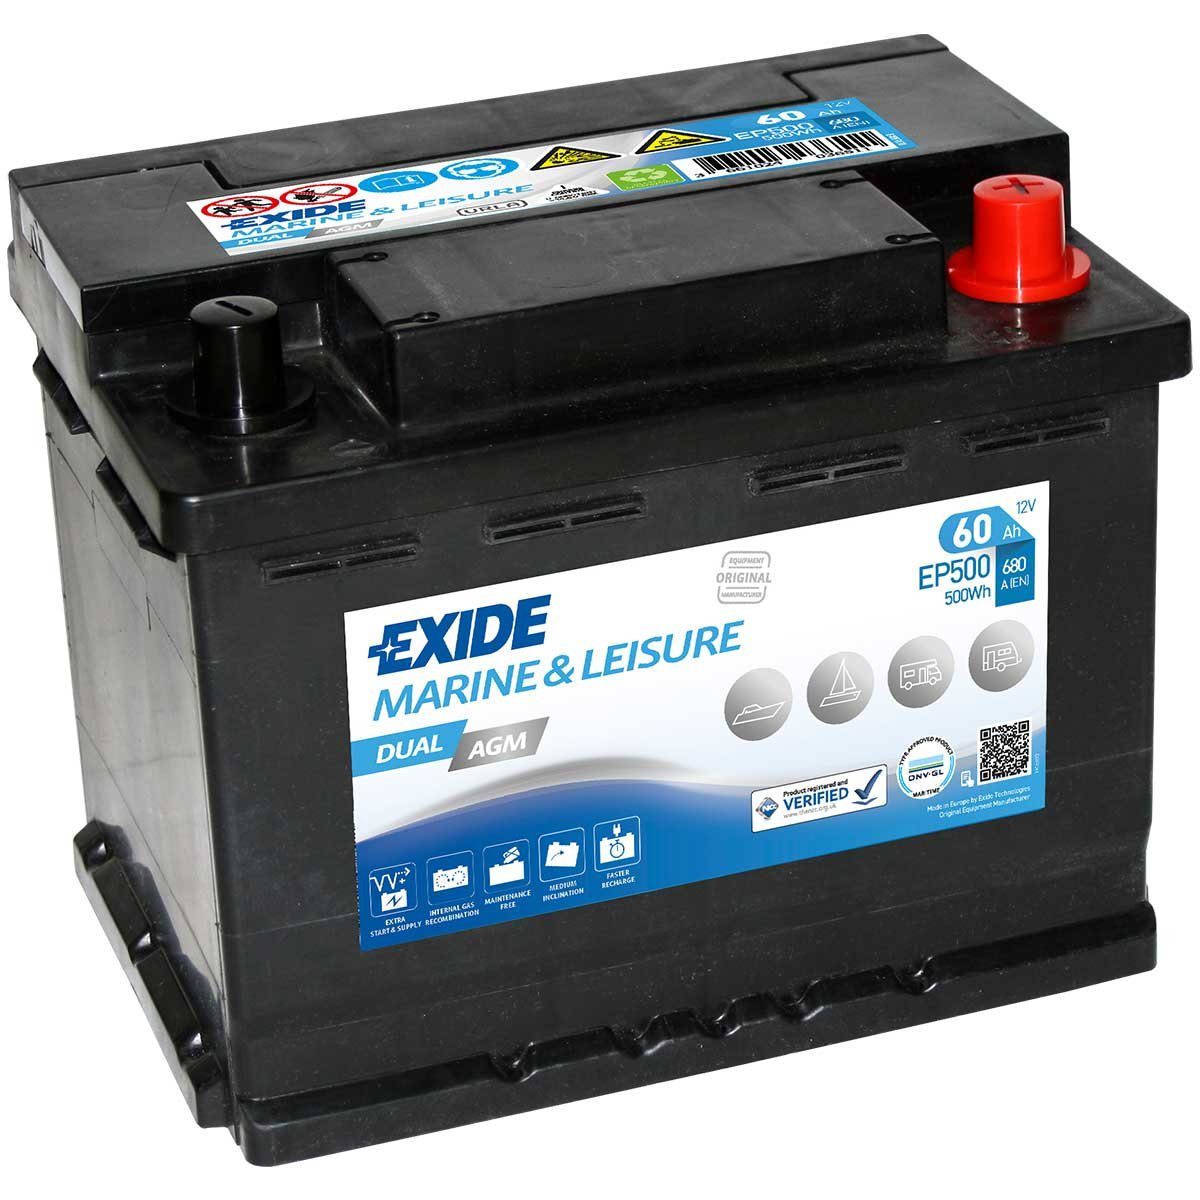 Exide Exide EP500 DUAL AGM 12V 60Ah Marine & Leisure Batterie Batterie, (12 V)